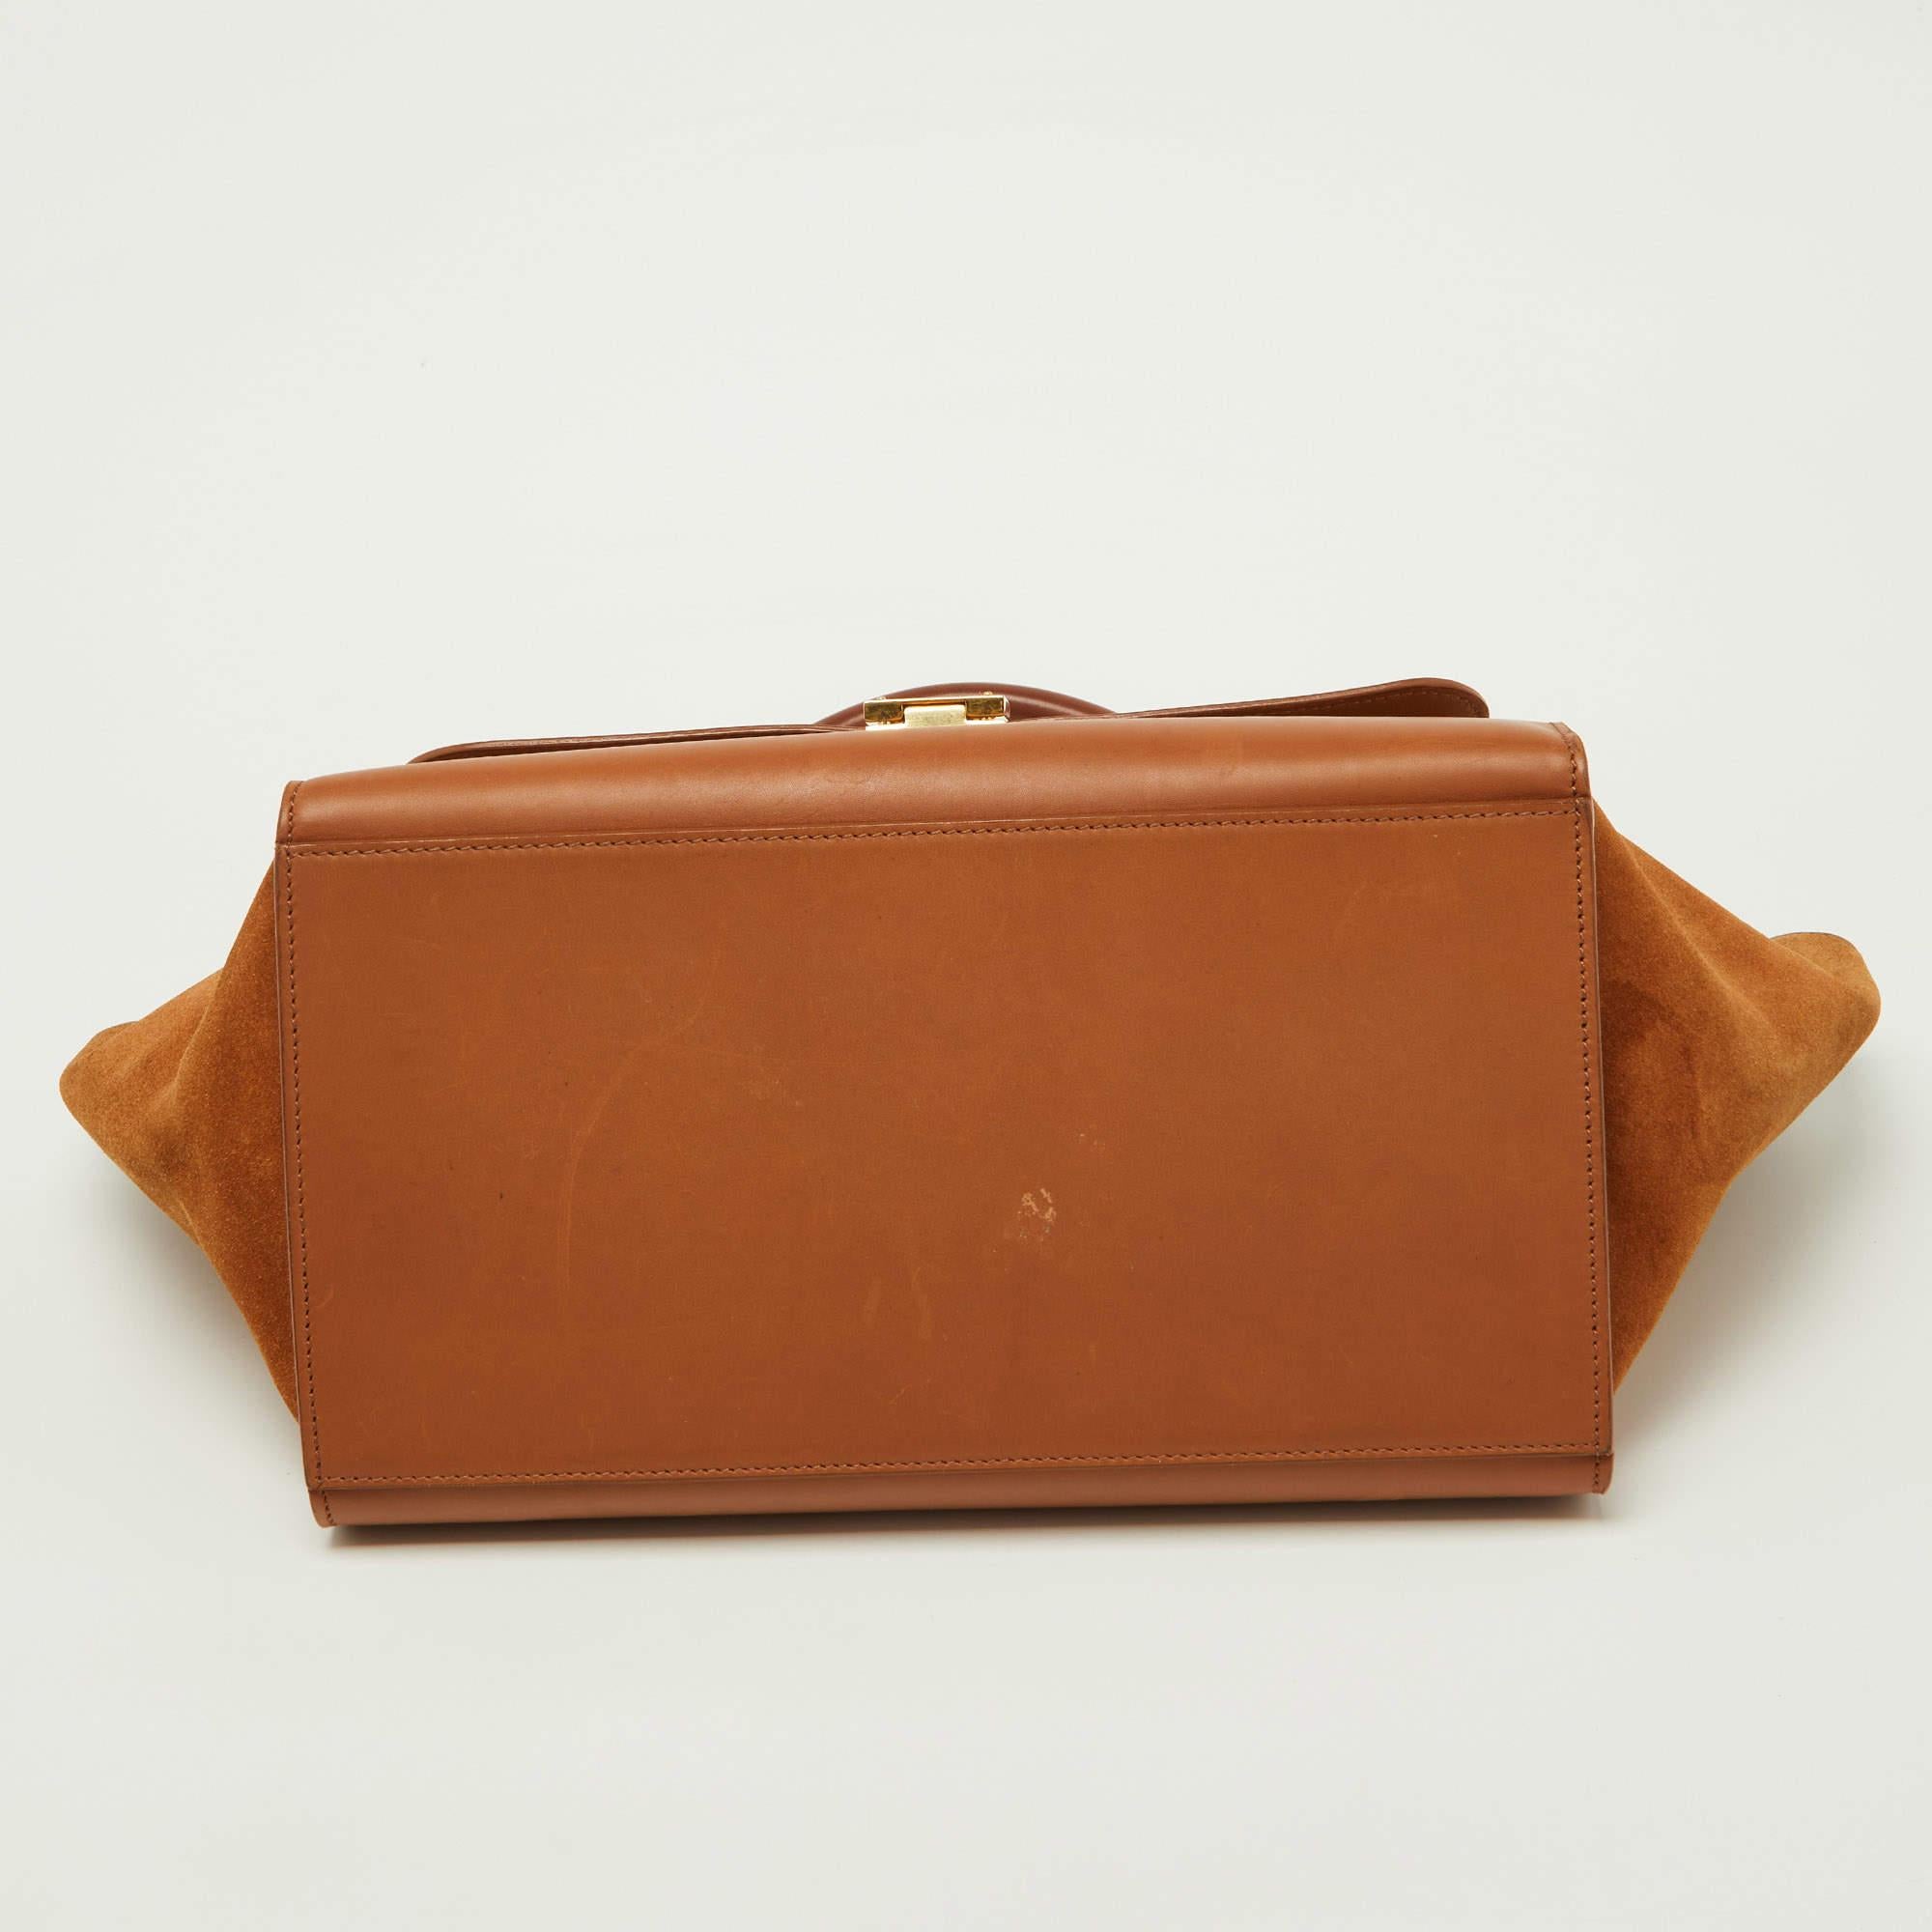 Celine Tan Leather and Suede Medium Trapeze Bag 1